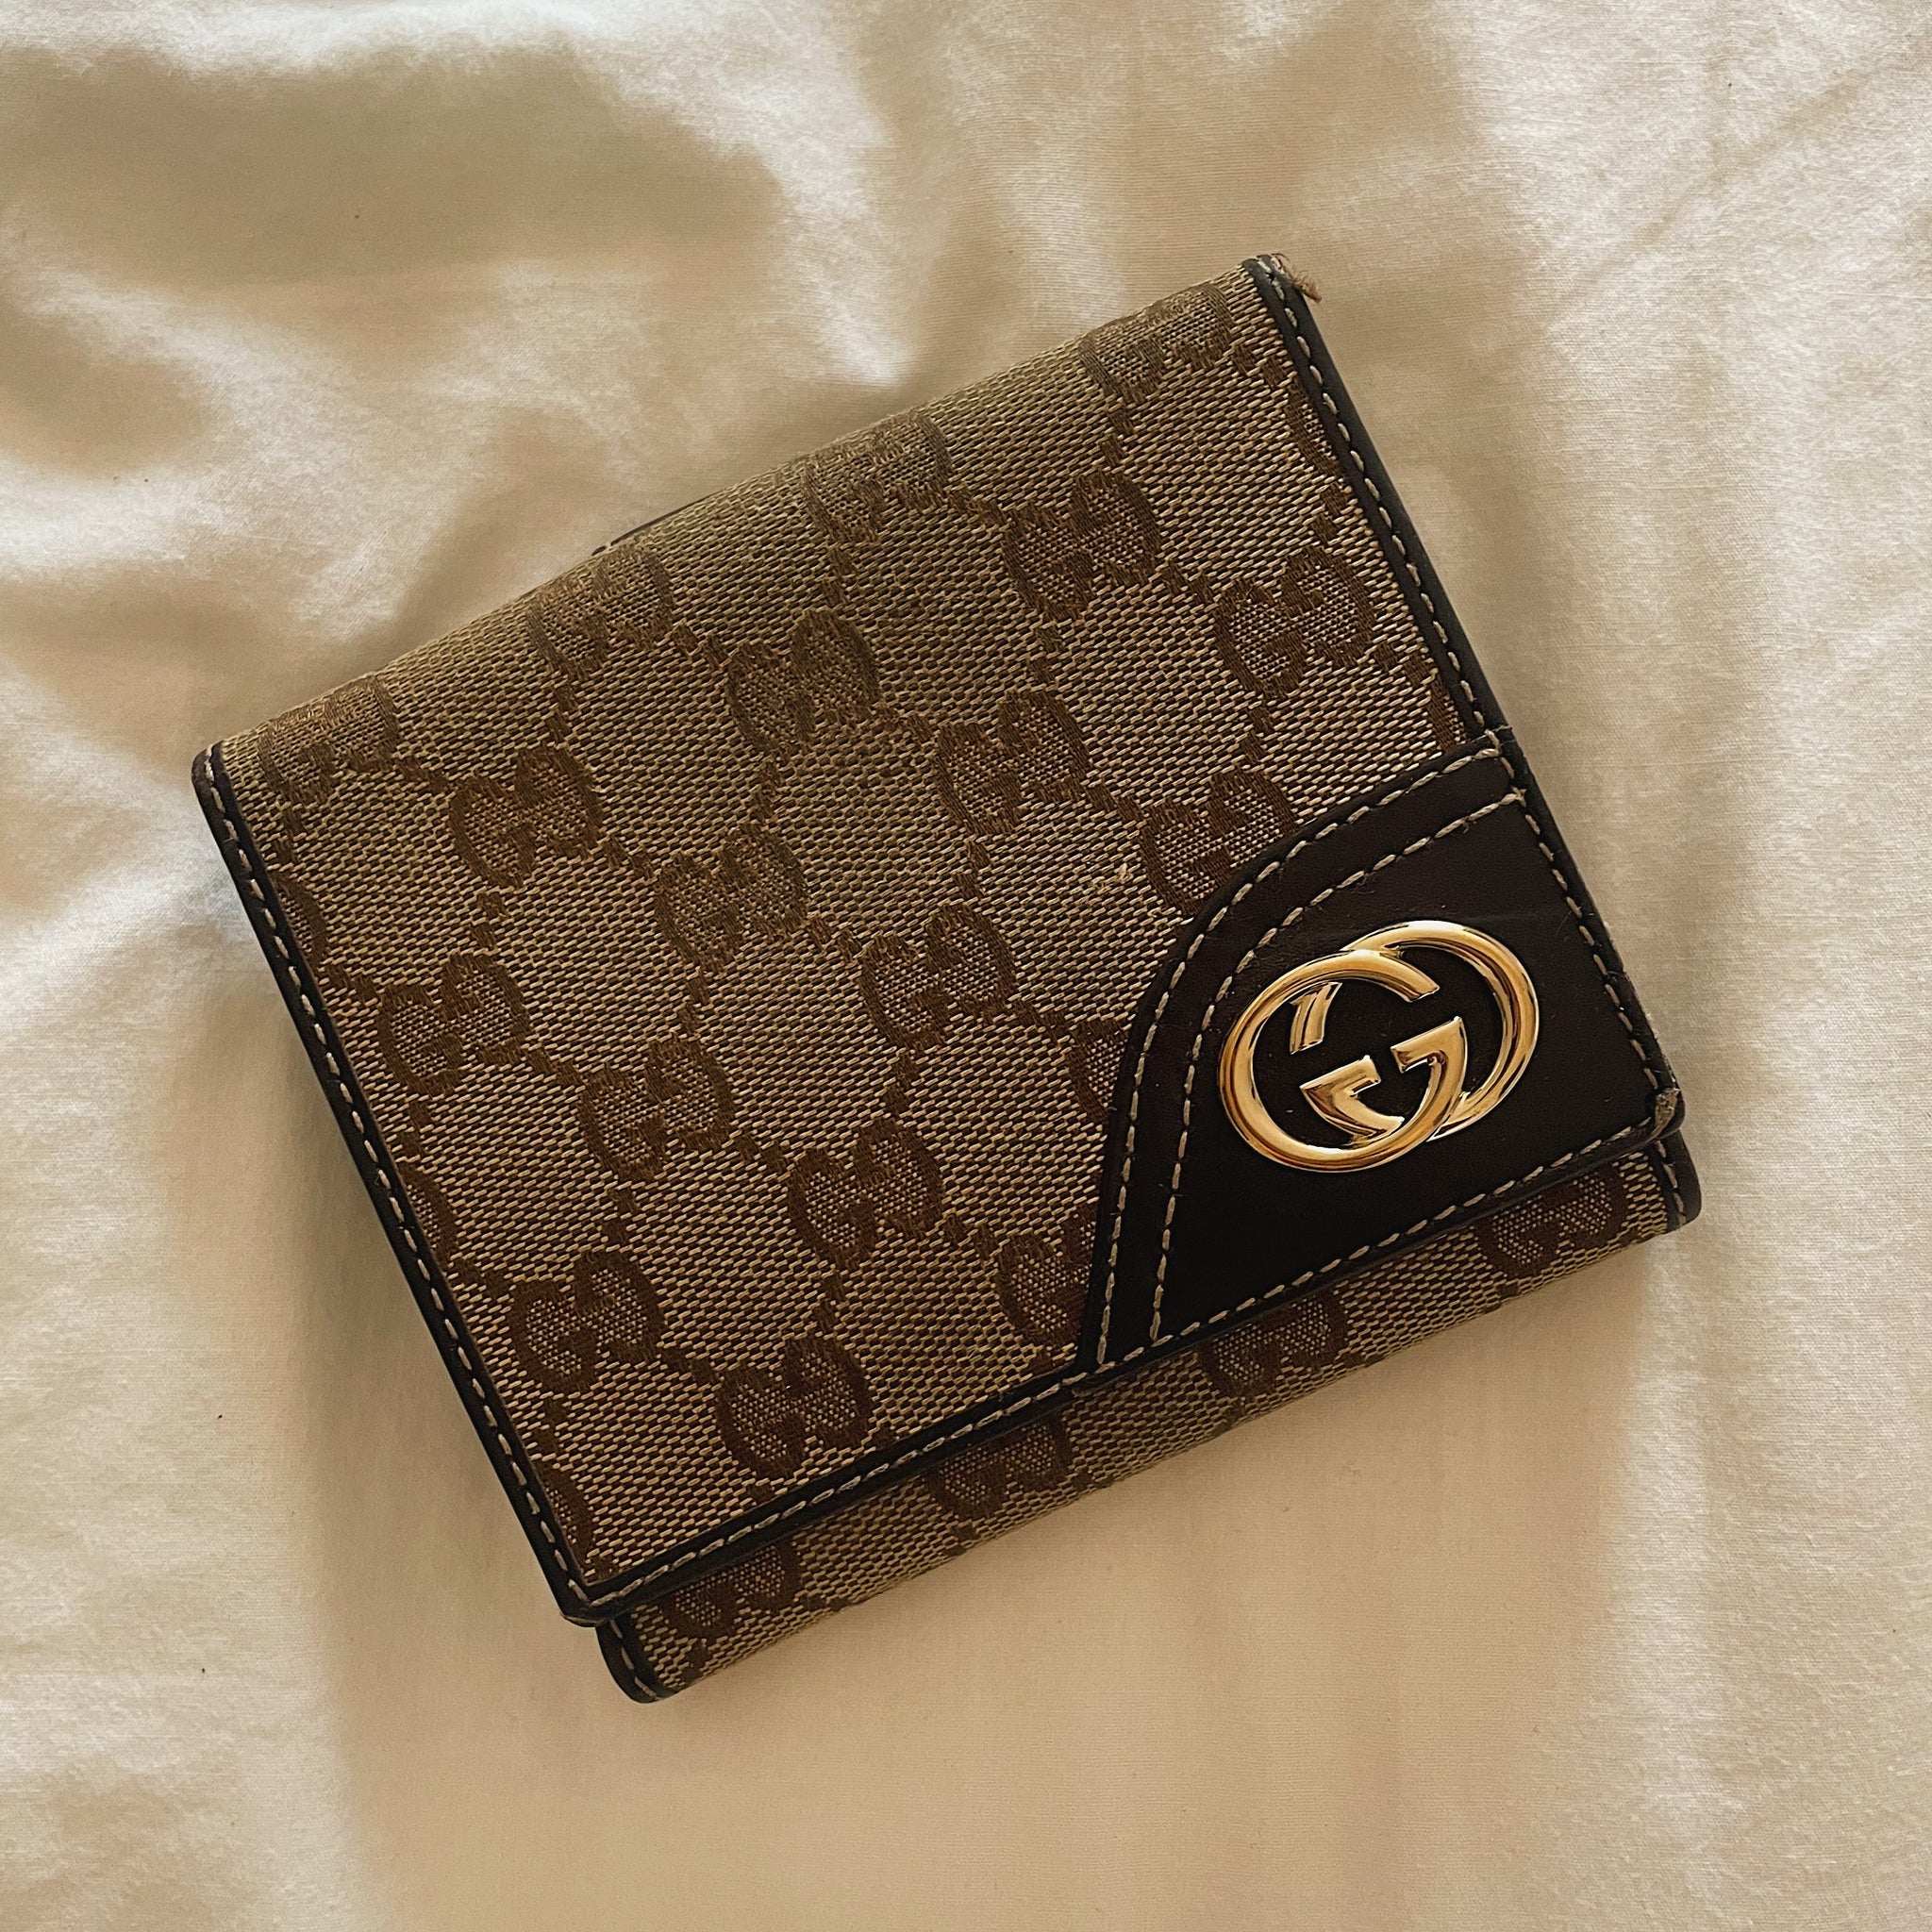 Black Leather GG Marmont Bi-Fold Wallet